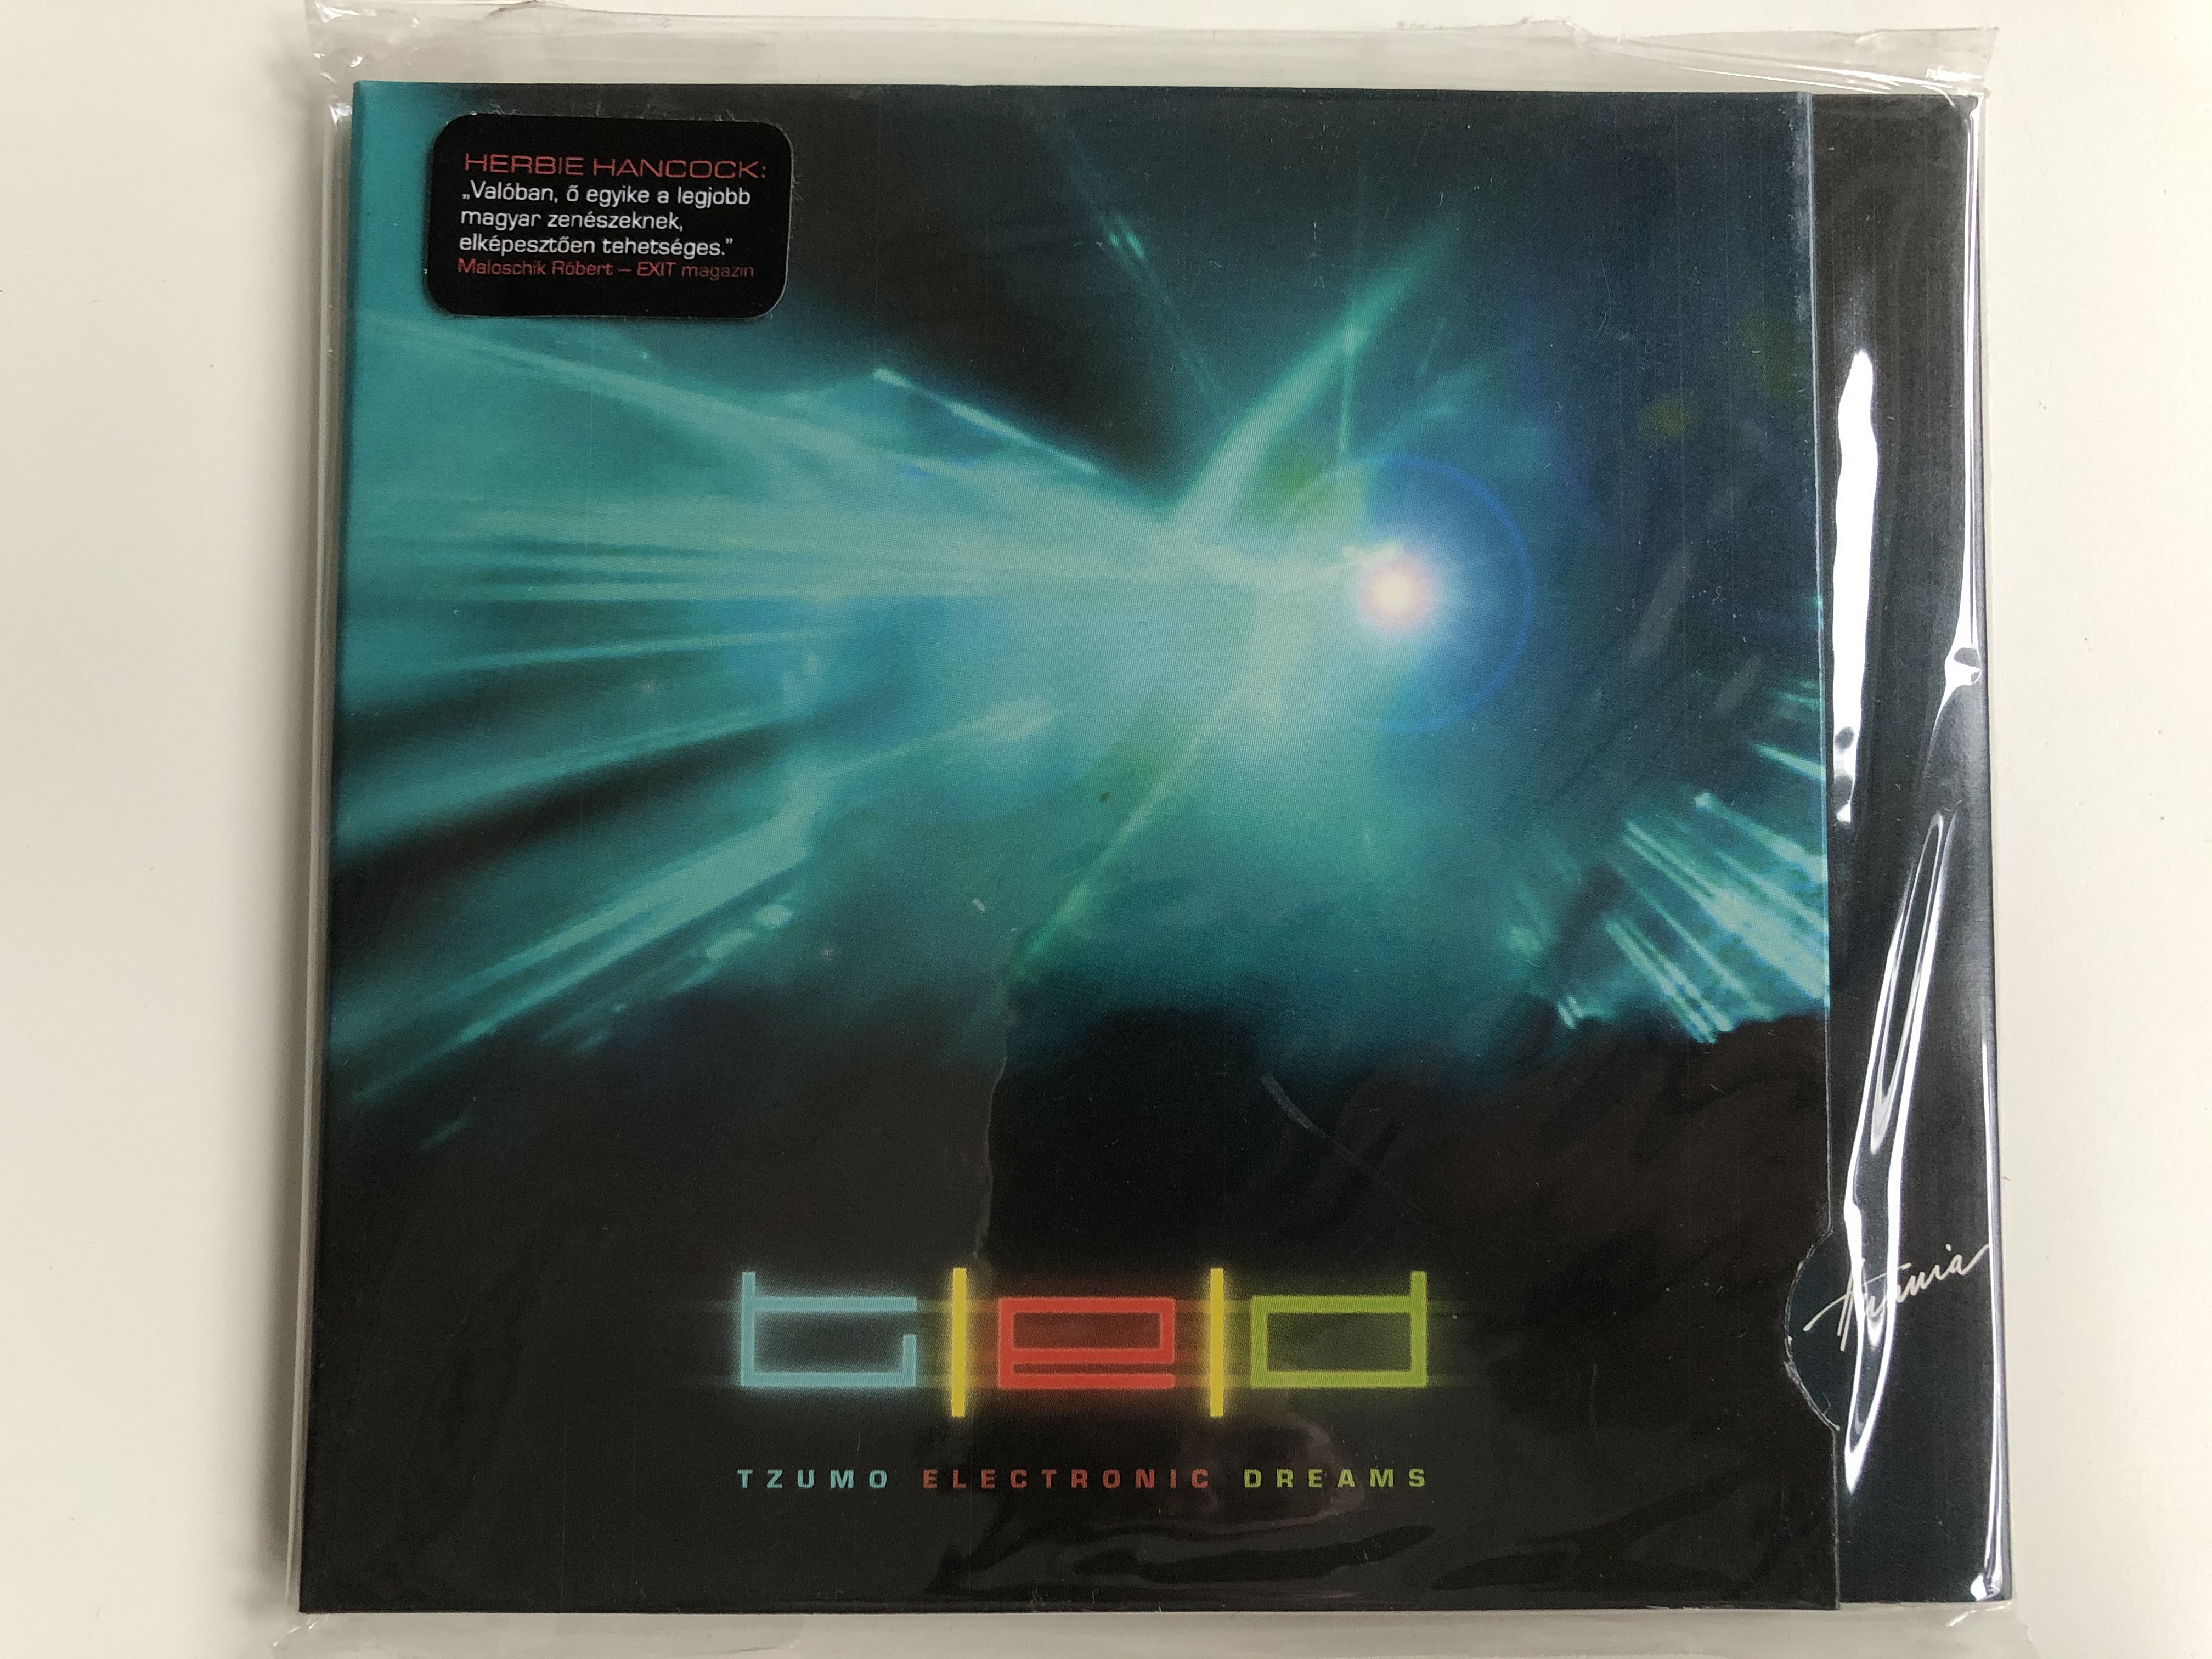 ted-tzumo-electronic-dreams-hunnia-records-audio-cd-hrcd-703-1-.jpg